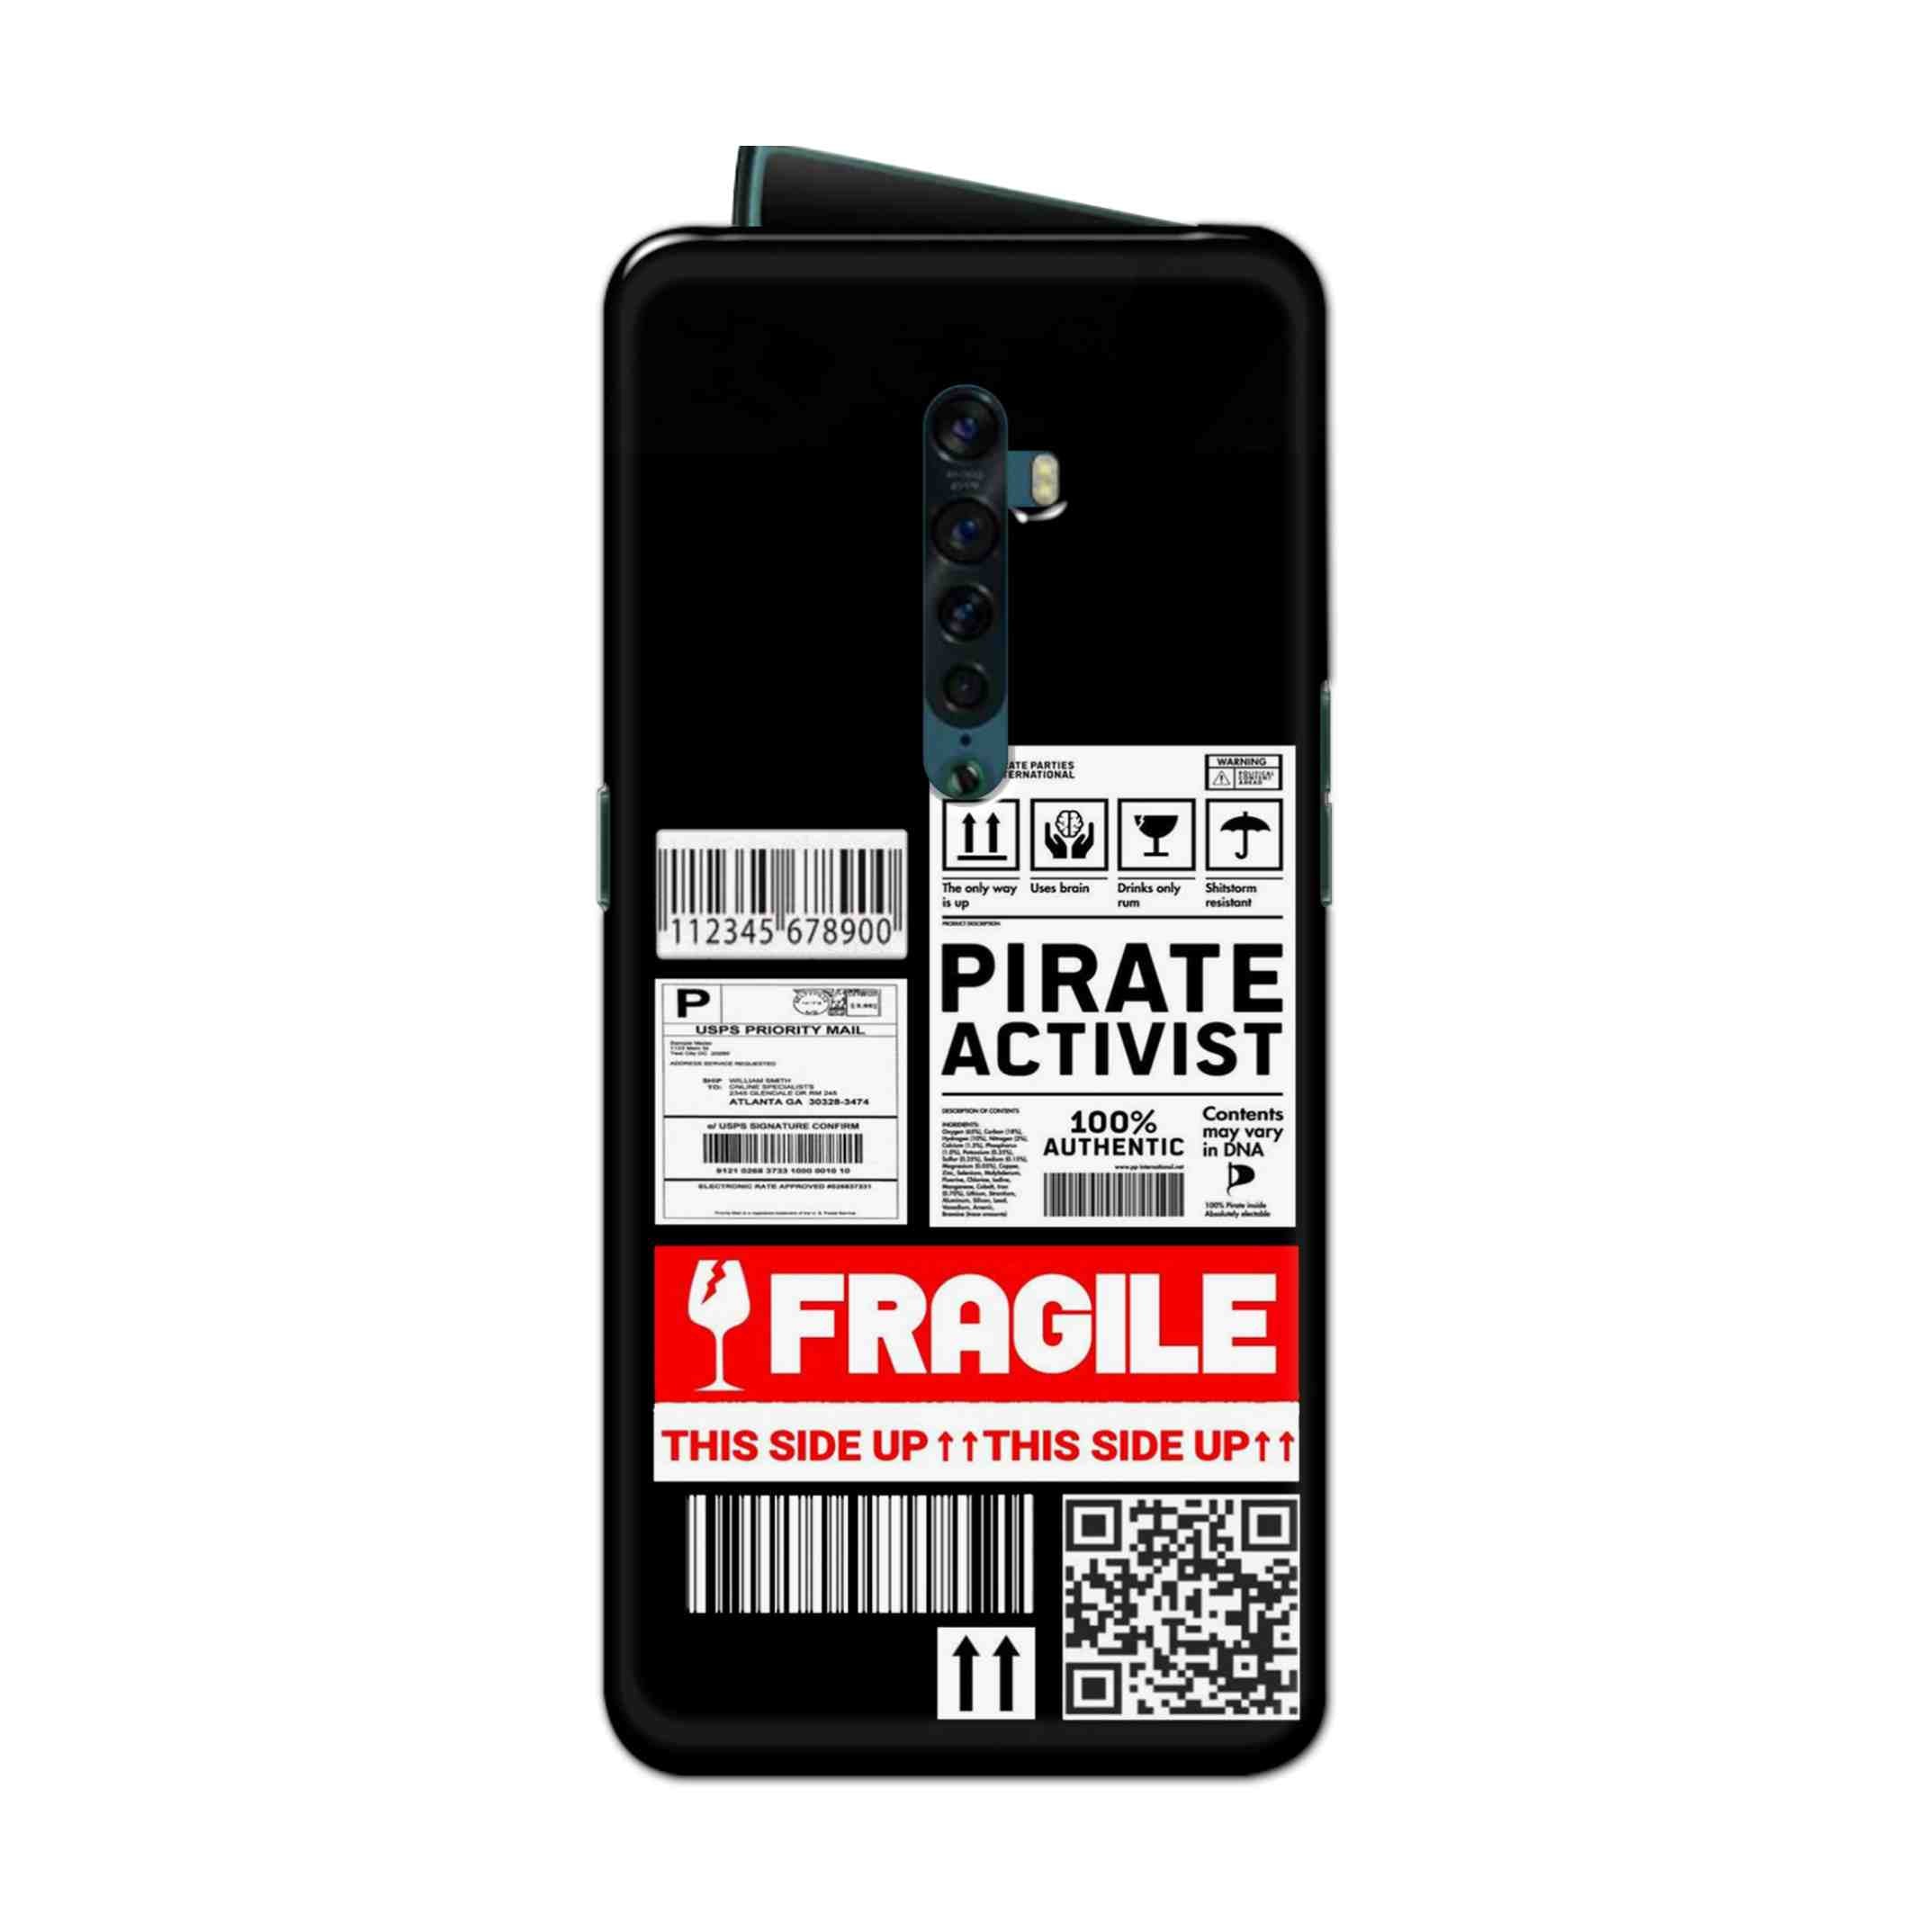 Buy Fragile Hard Back Mobile Phone Case Cover For Oppo Reno 2 Online